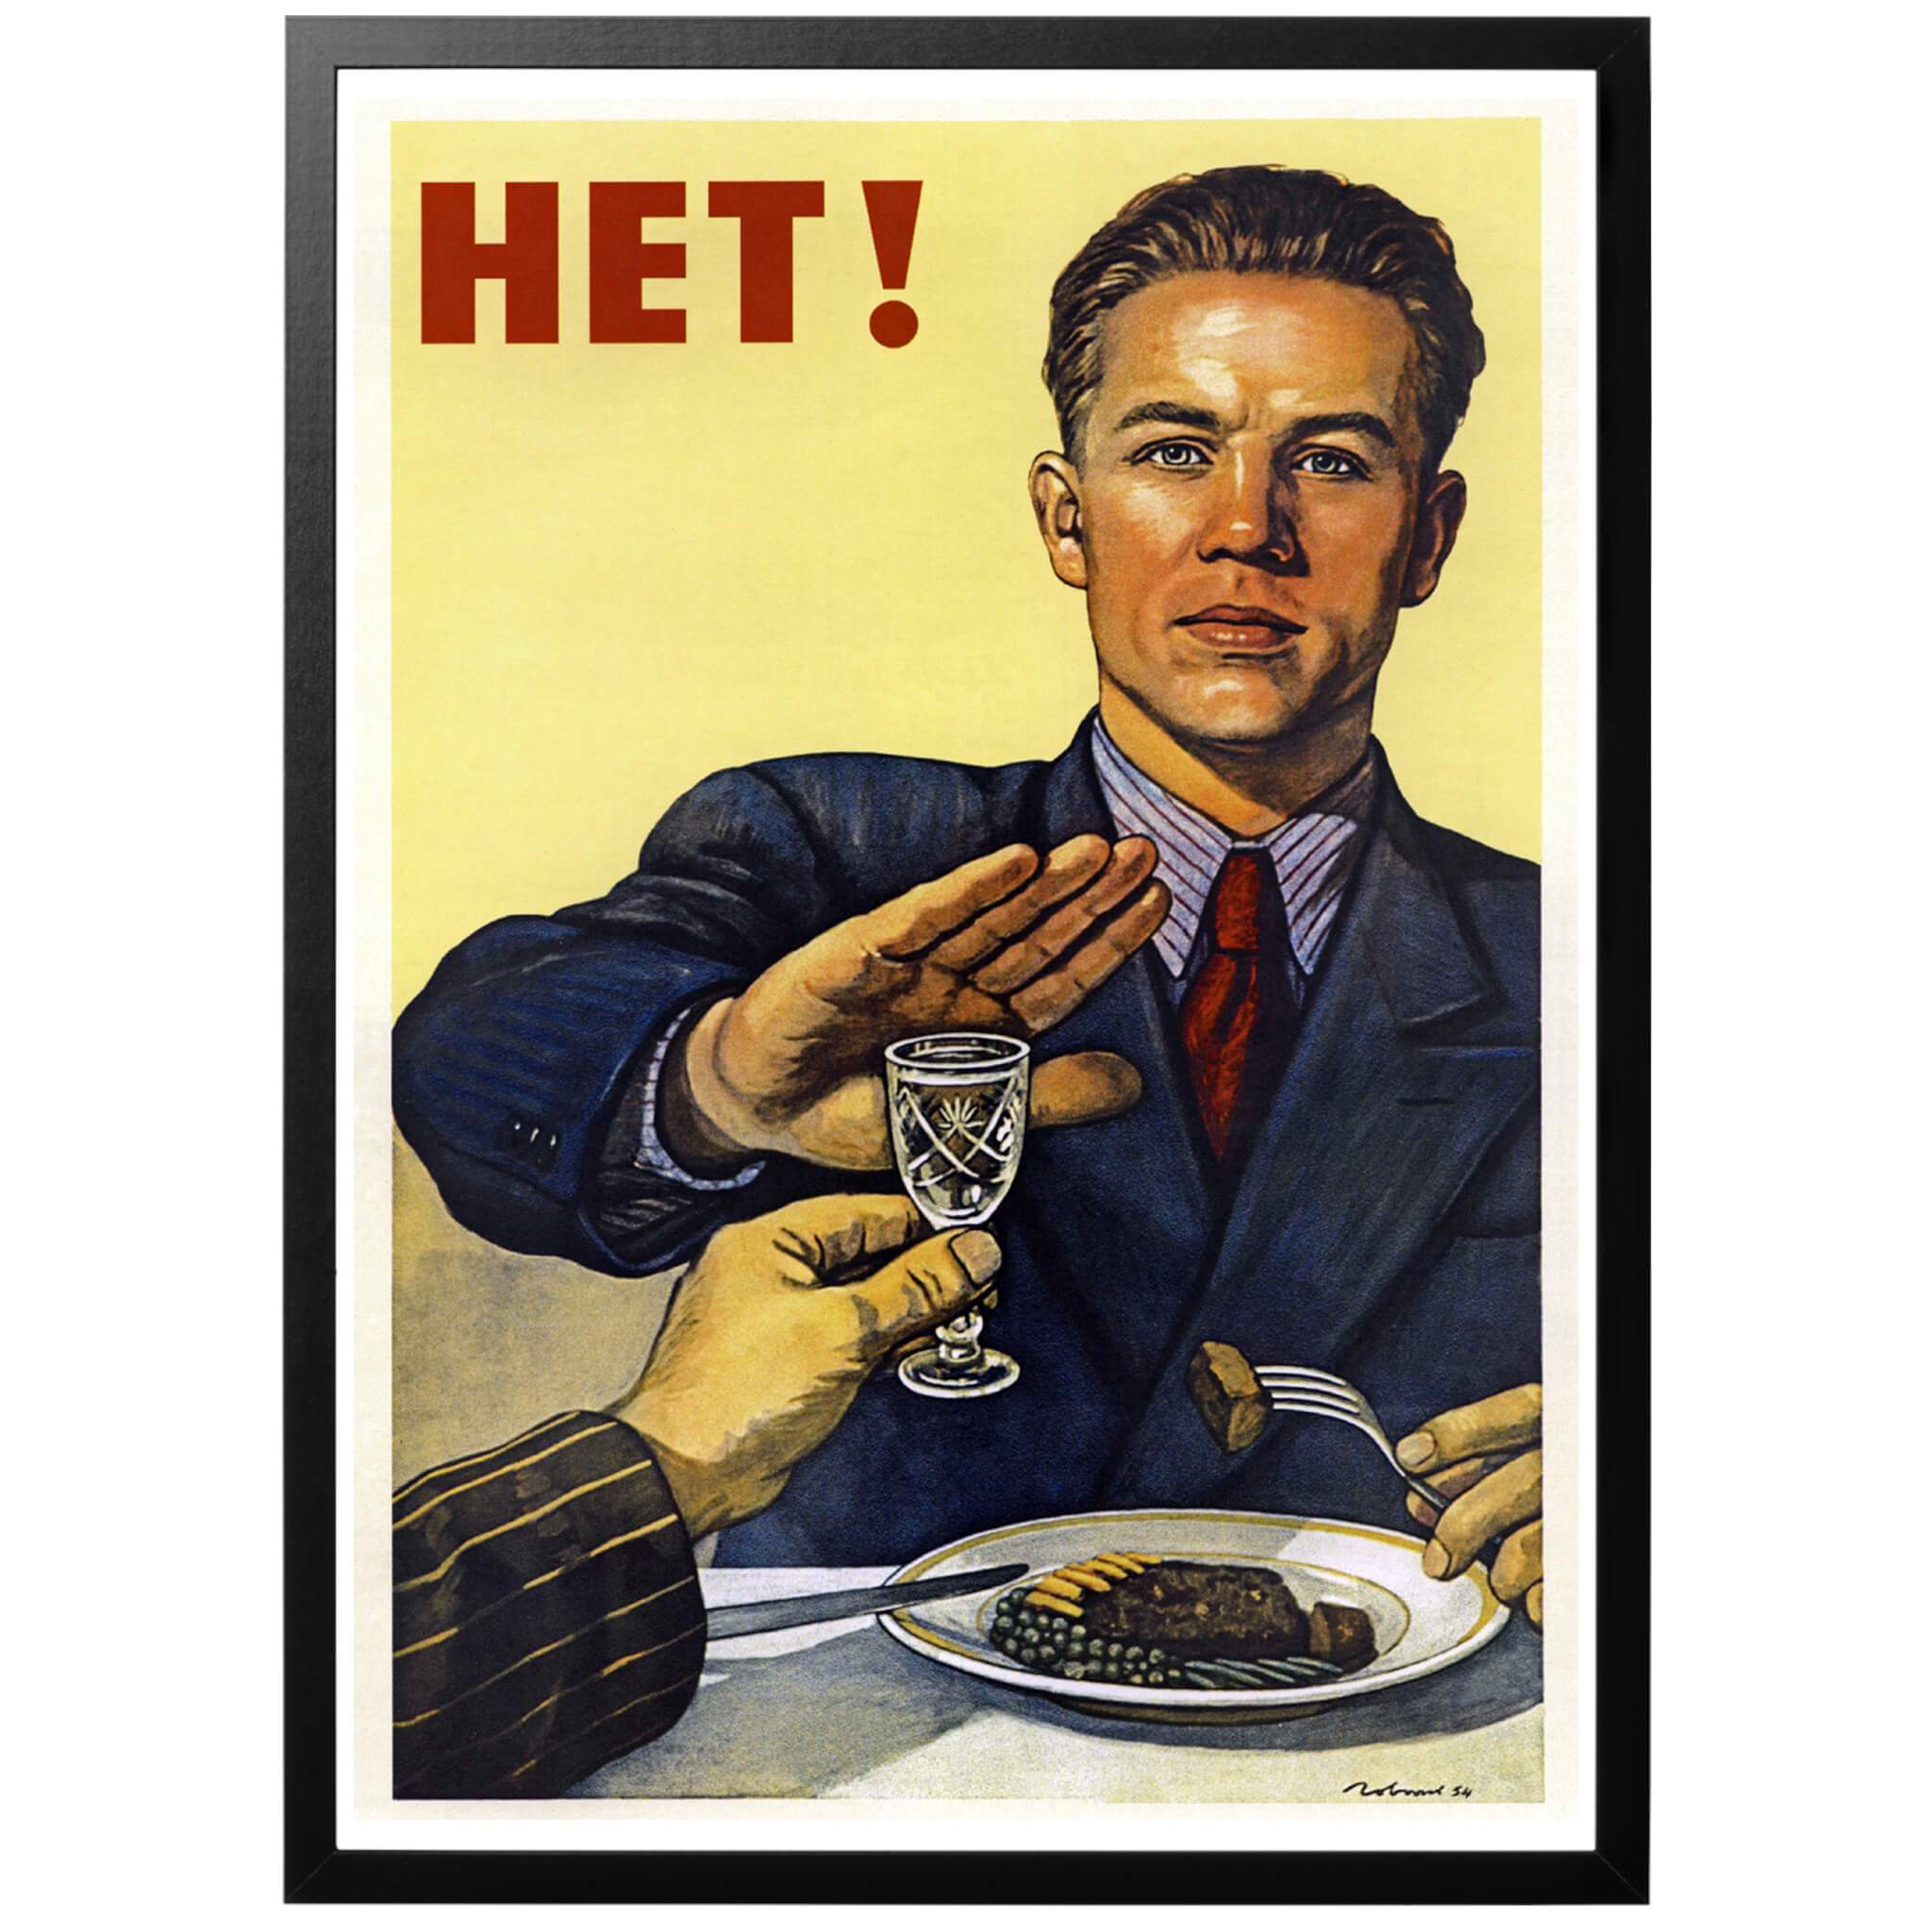 Het! No! Poster – World War Era